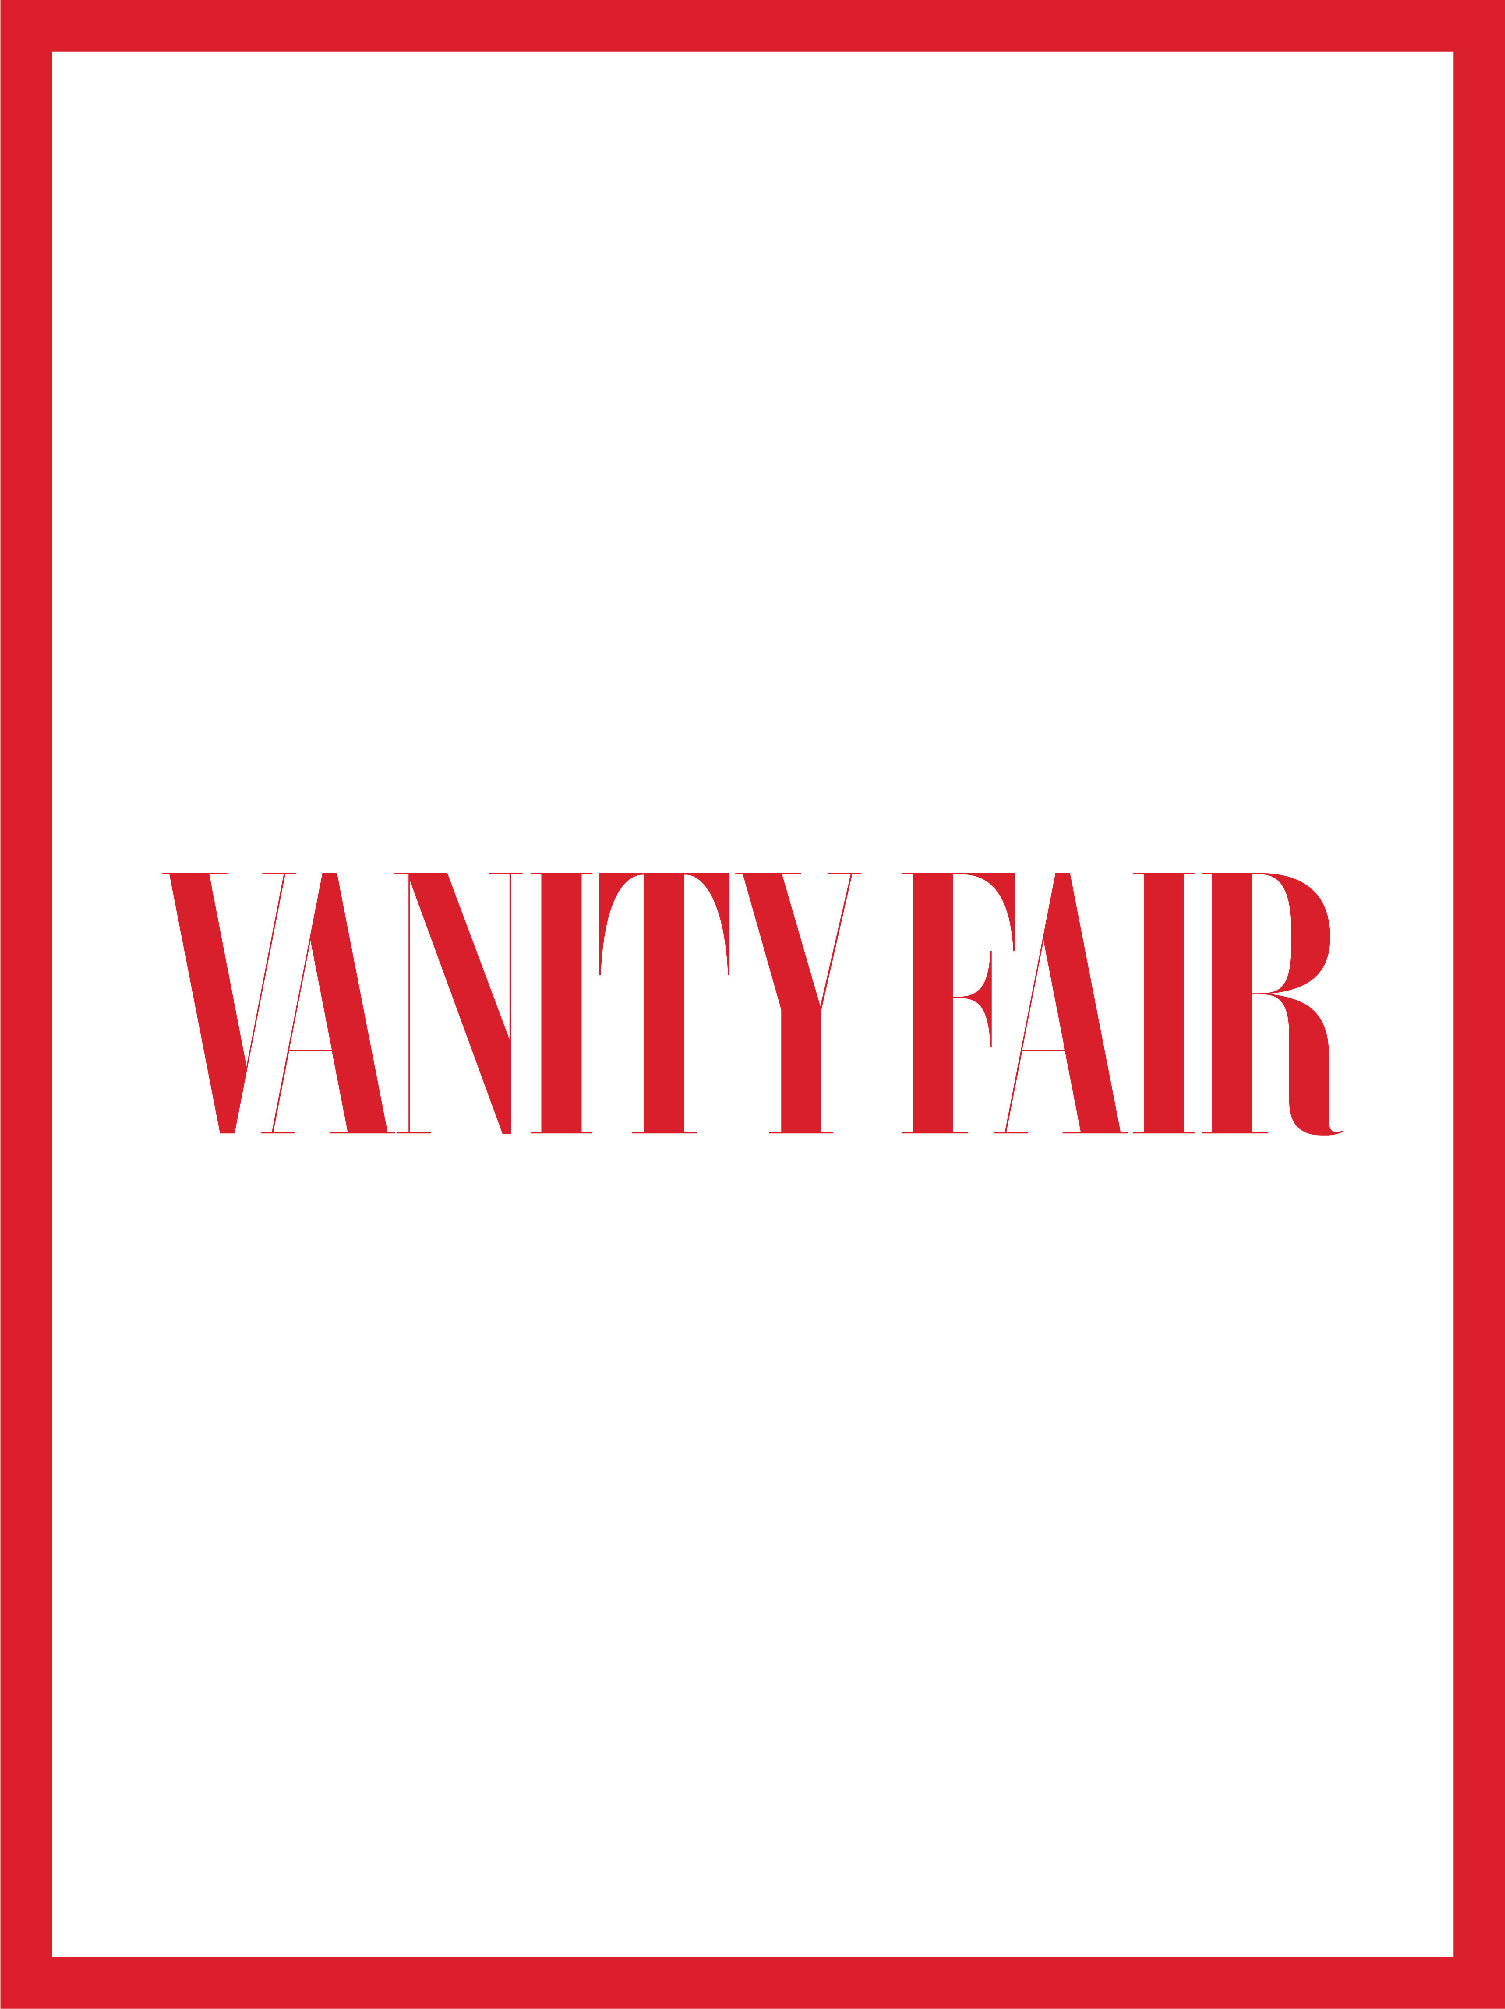 logo of the magazine vanity fair